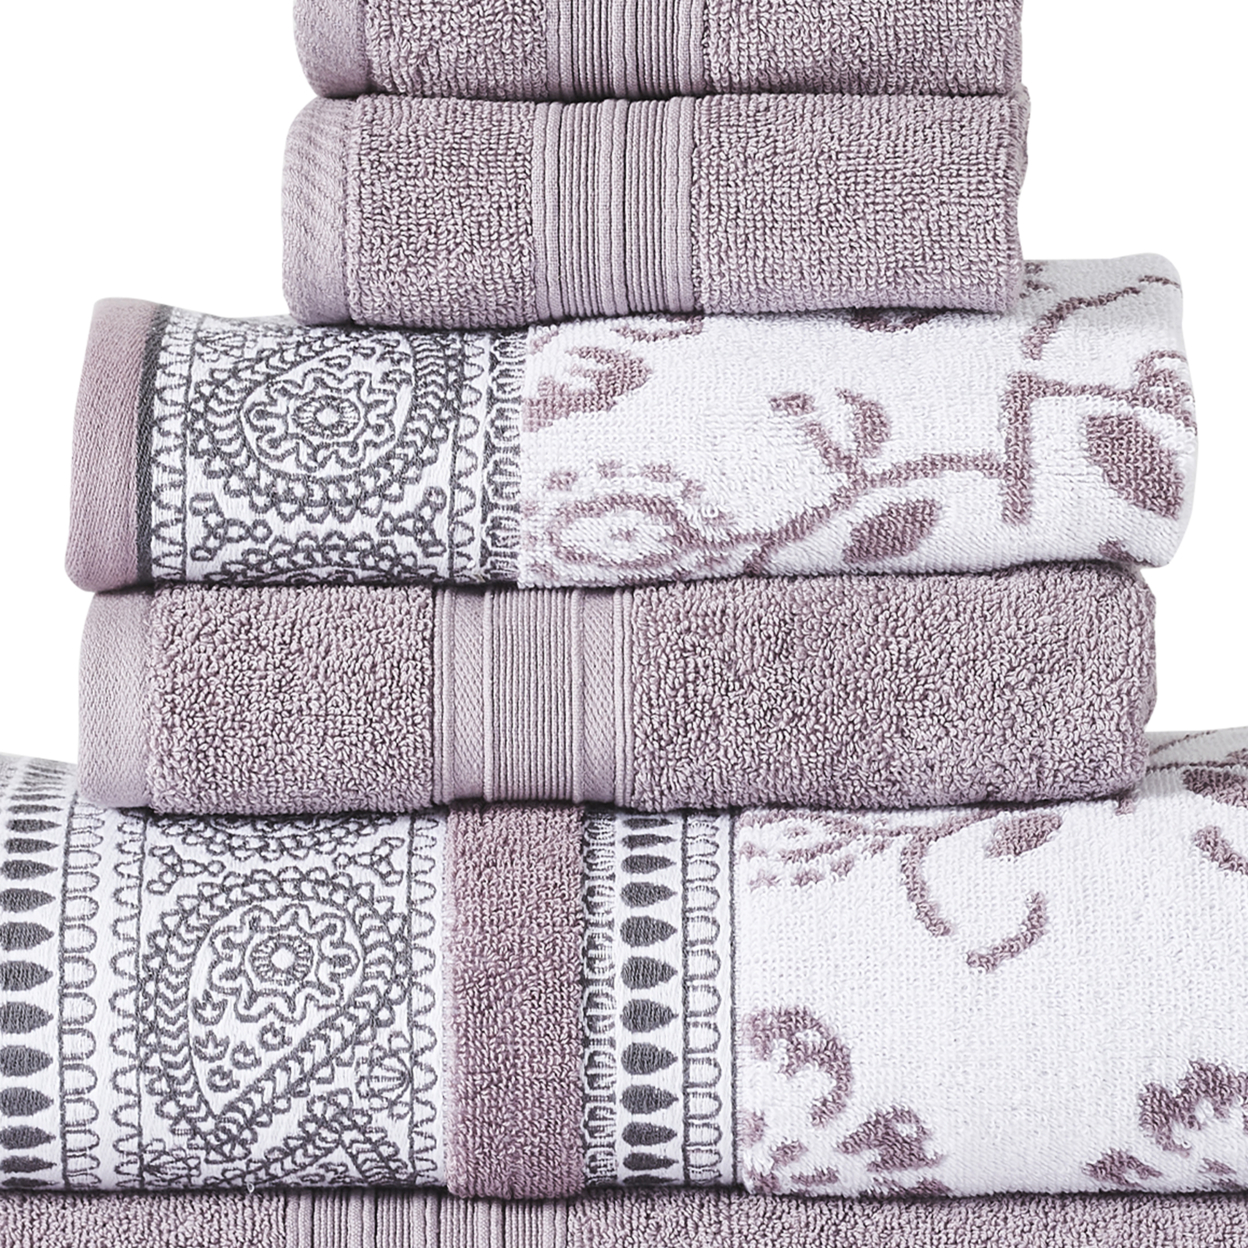 Veria 6 Piece Towel Set With Paisley And Floral Motif Pattern The Urban Port, Purple- Saltoro Sherpi